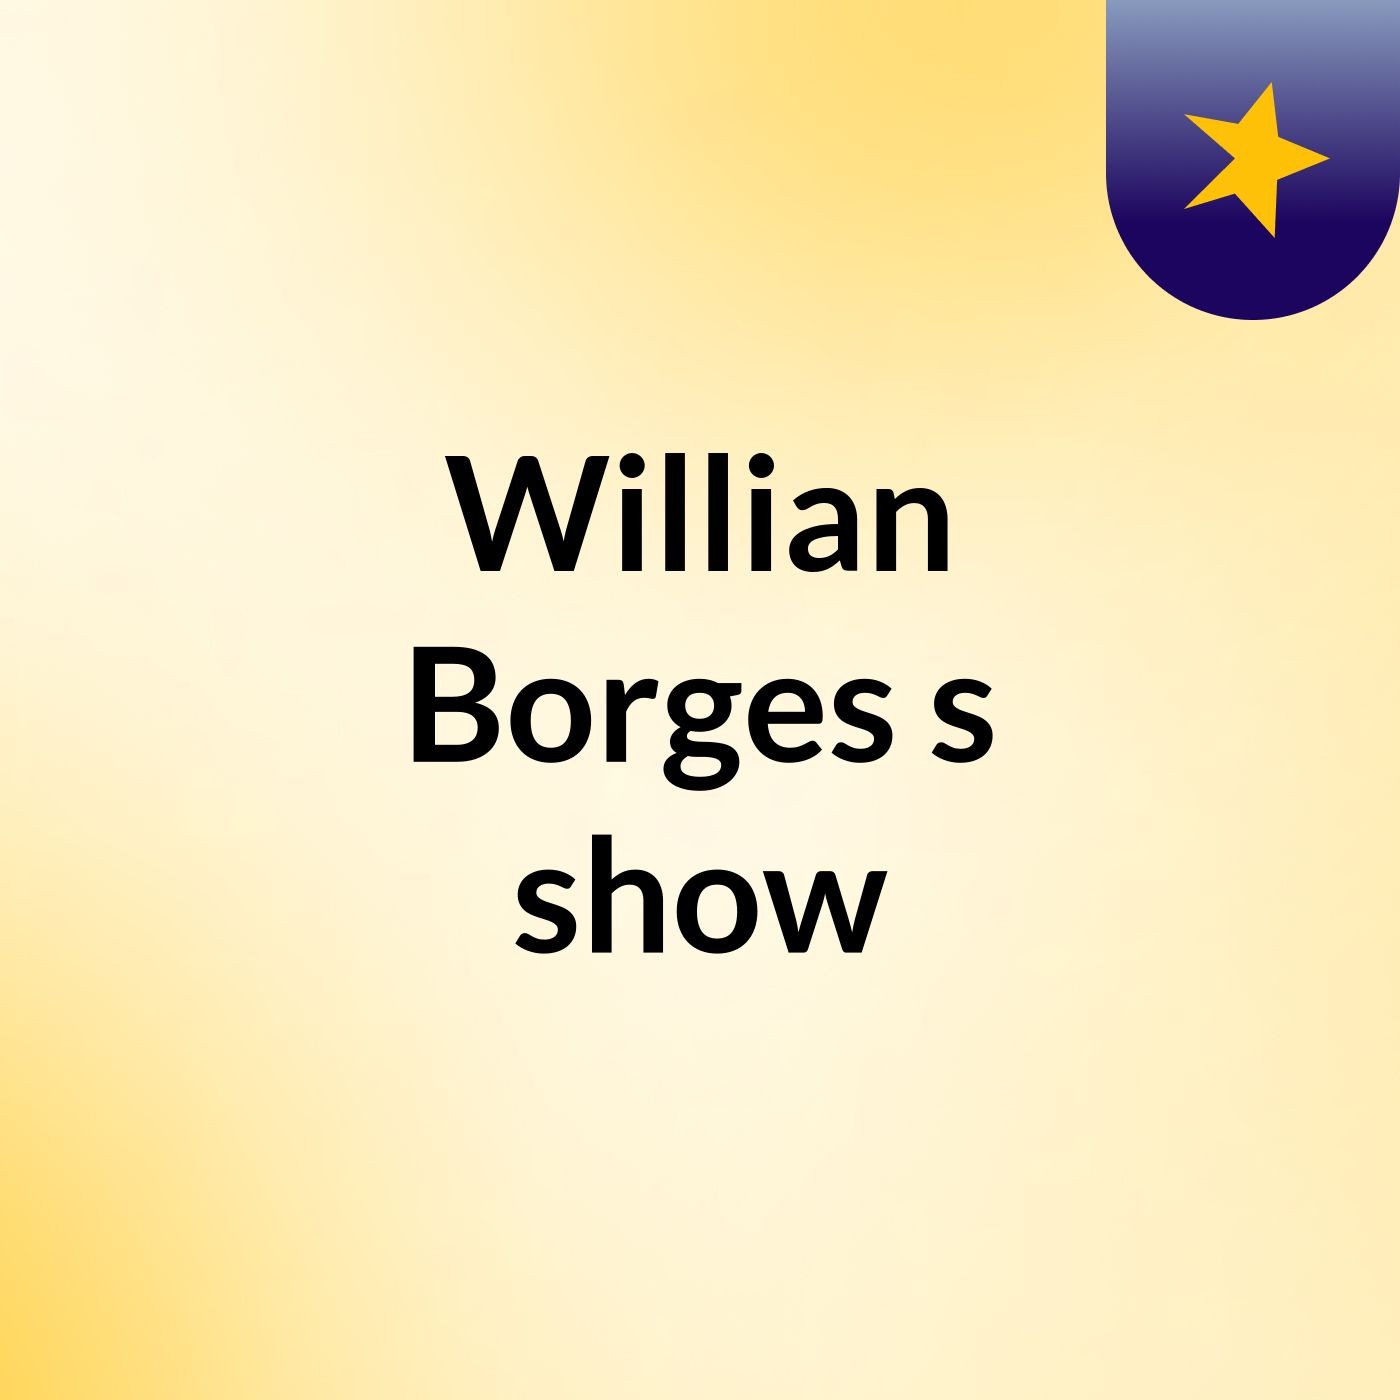 Willian Borges's show